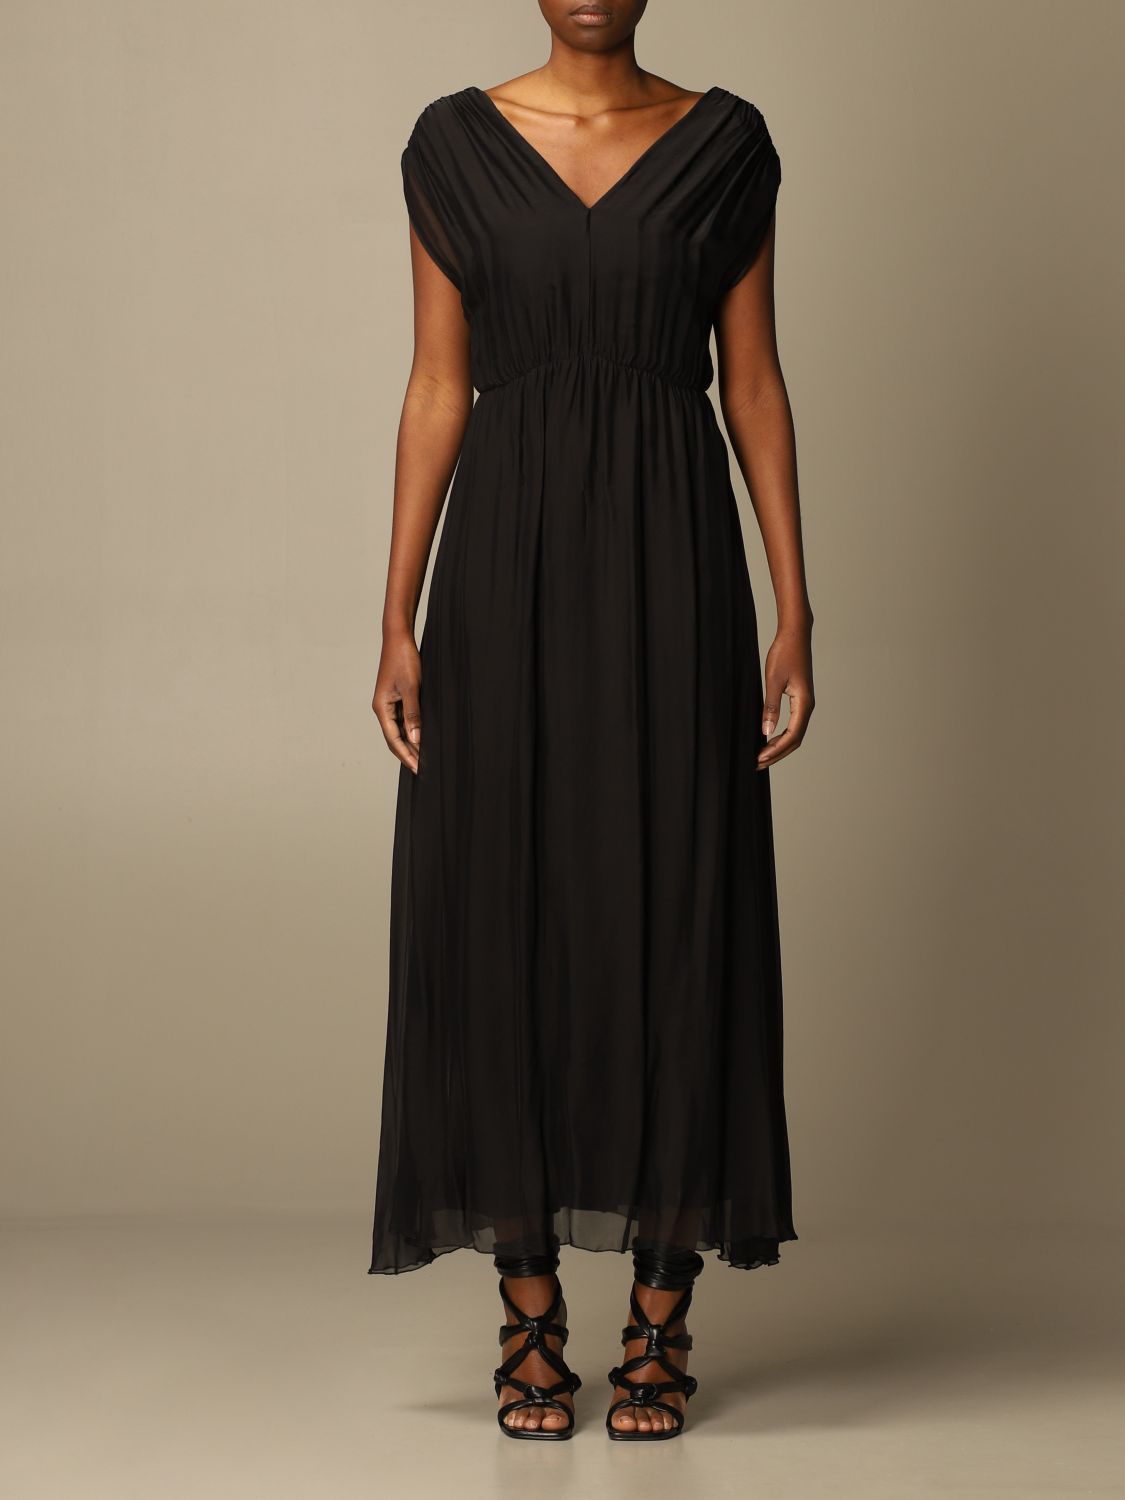 KAOS: dress for woman - Black | Kaos dress NPJAR007 online at GIGLIO.COM